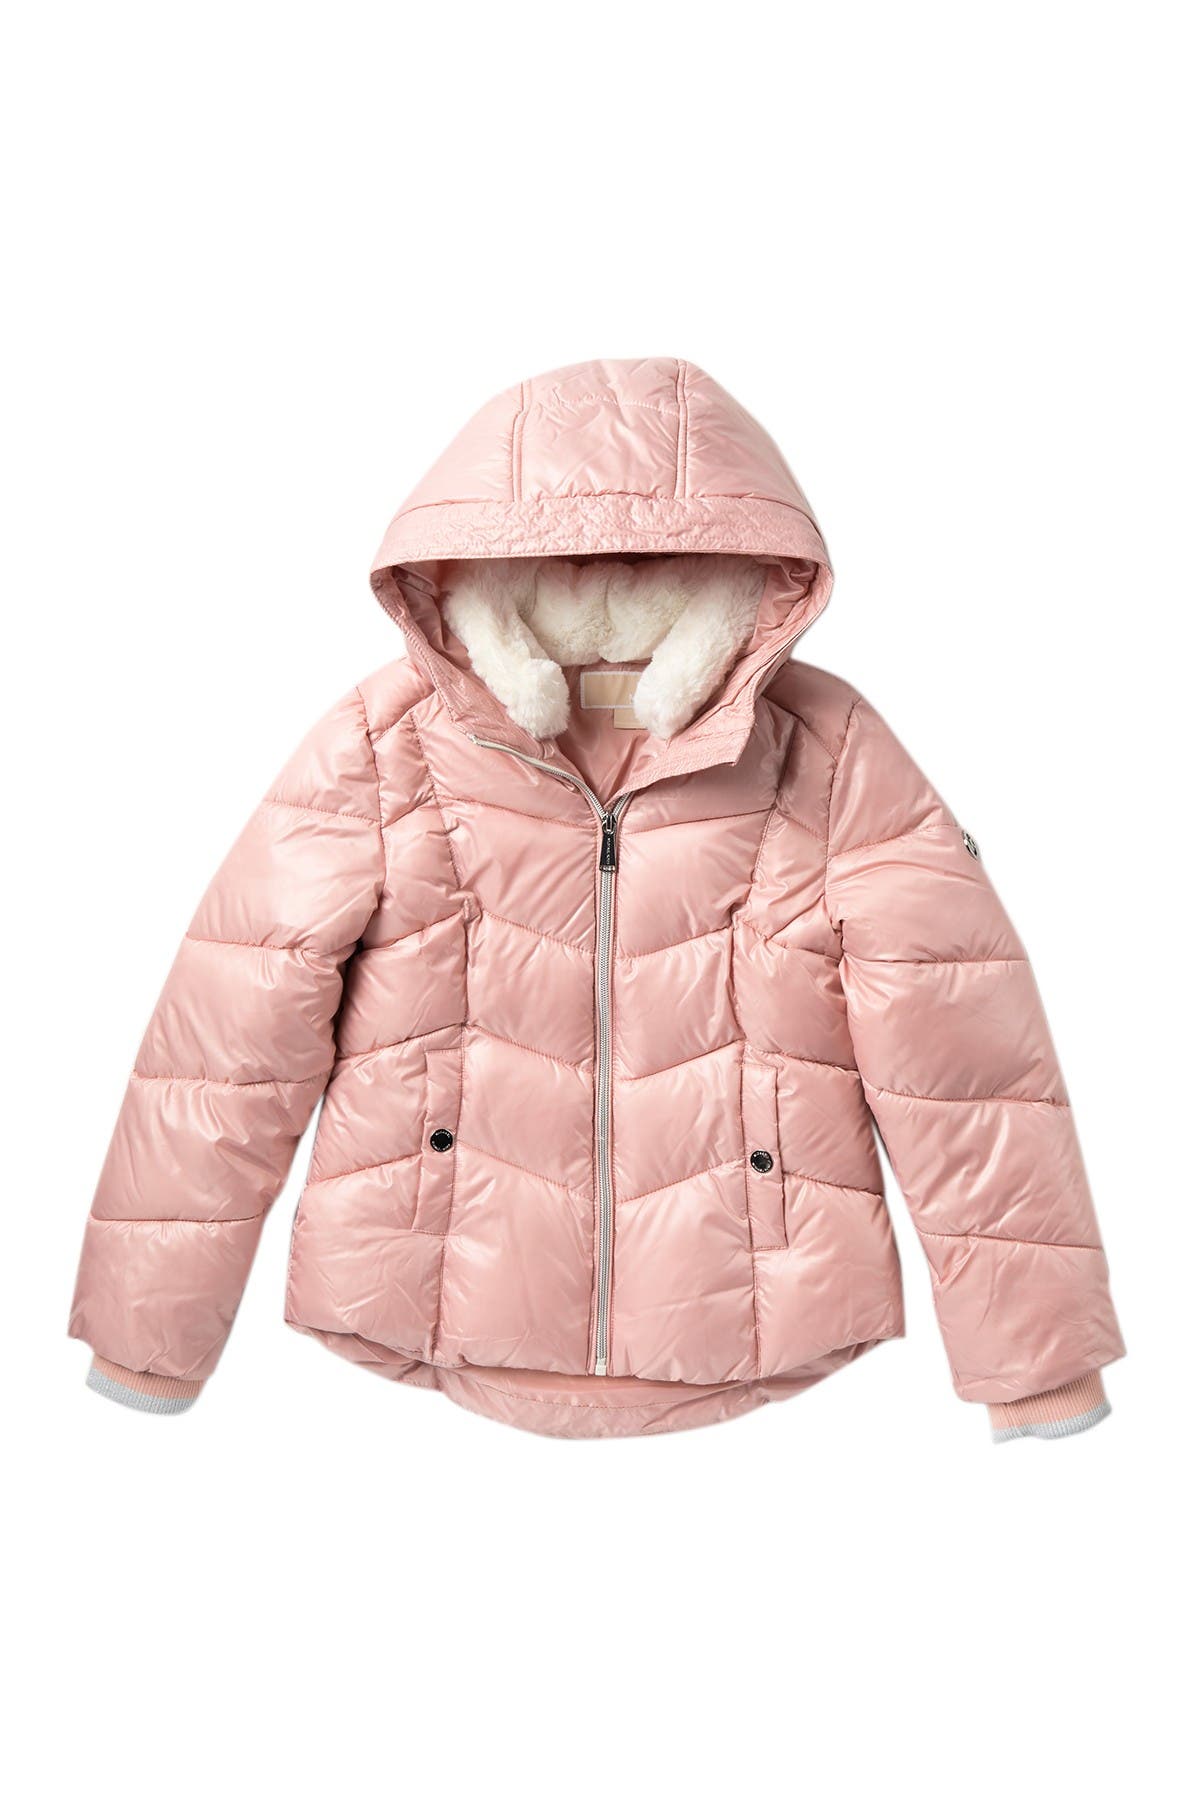 michael kors toddler girl jacket